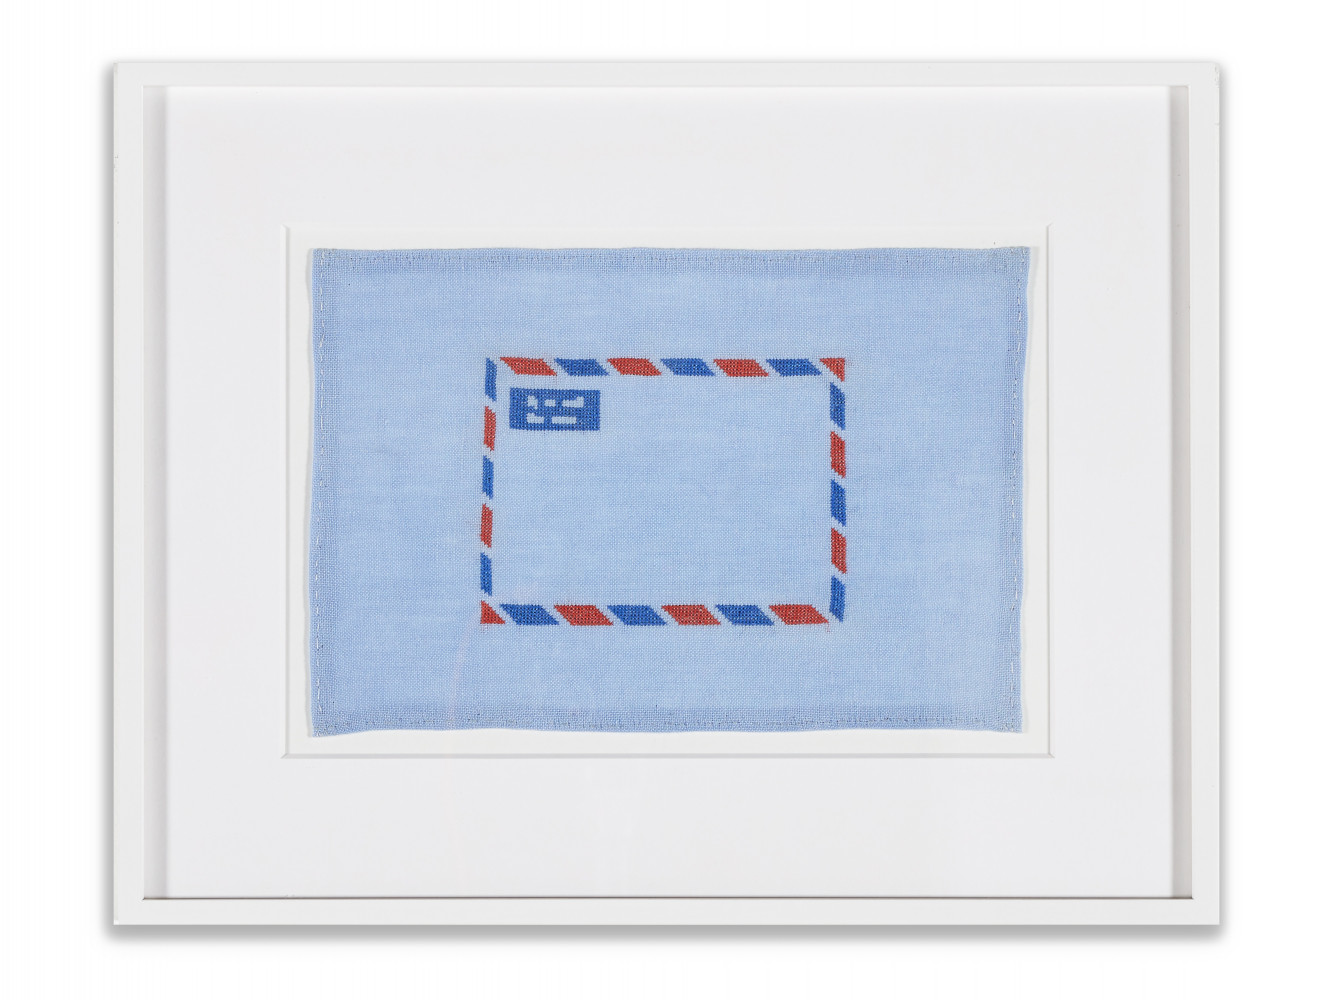 Des Hughes, ‘Airmail’, 2018, Cotton cross-stitch on dyed linen